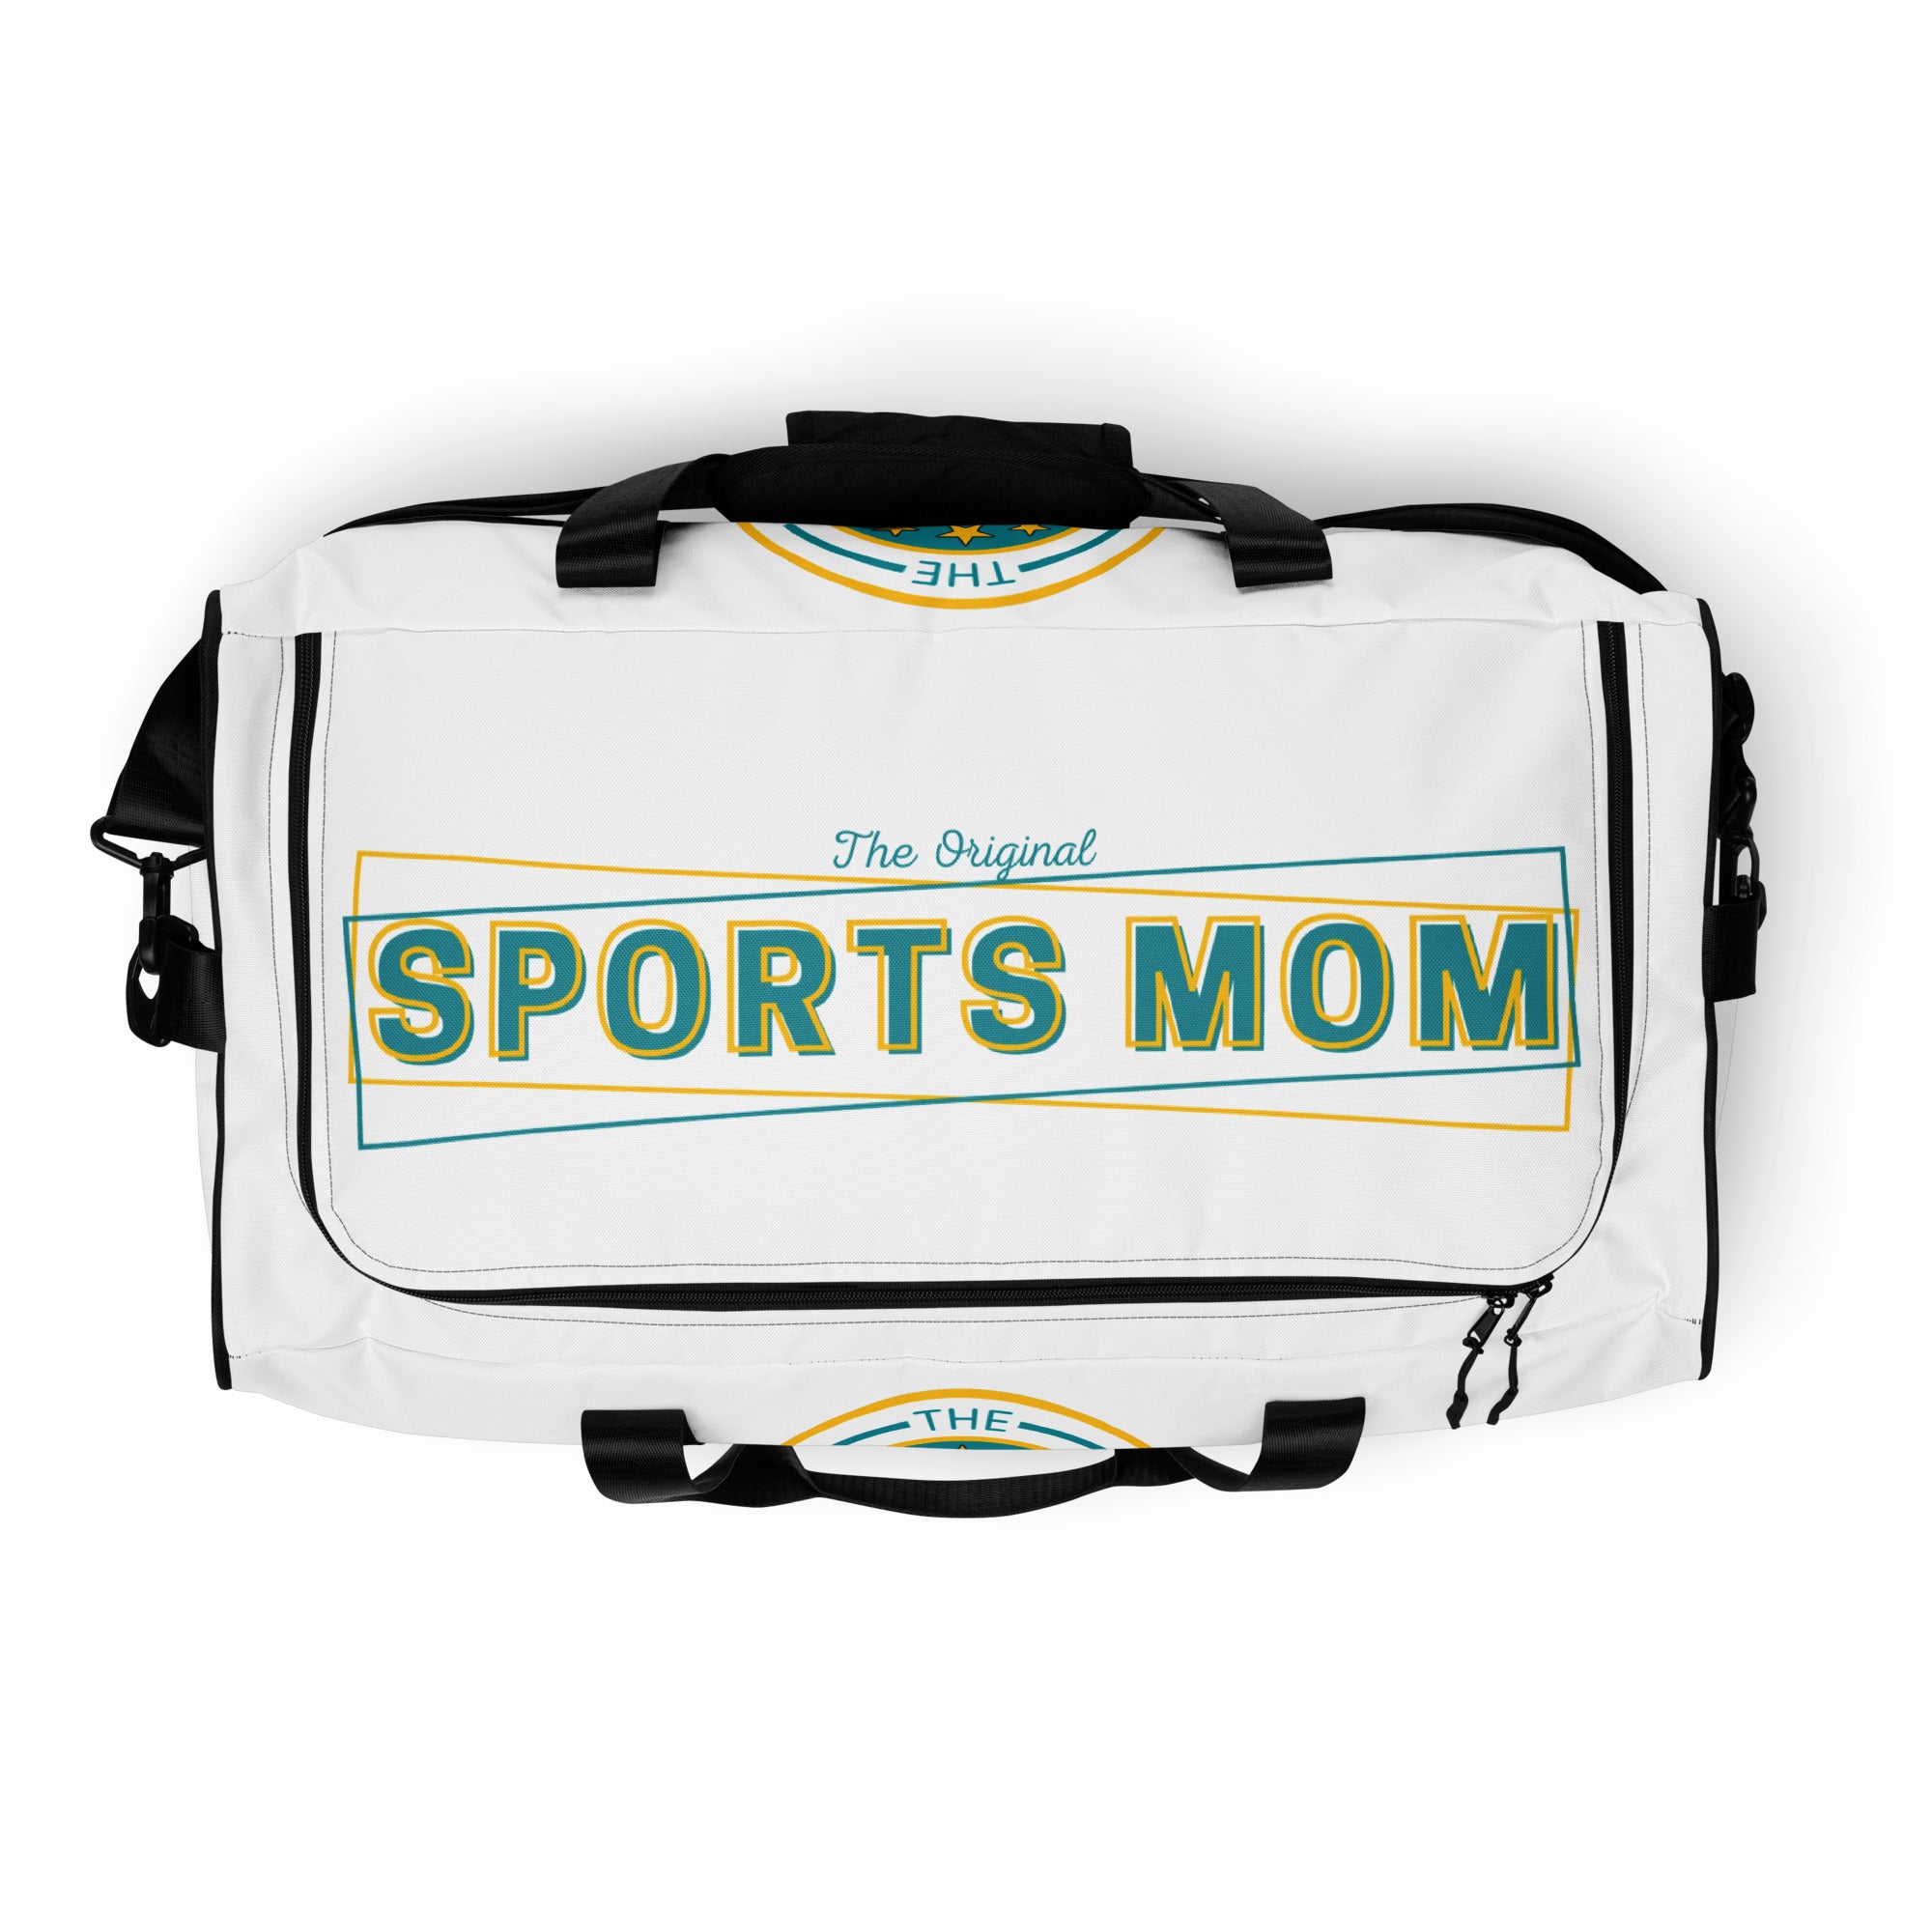 Sports Mom Ultimate Duffle Bag - White